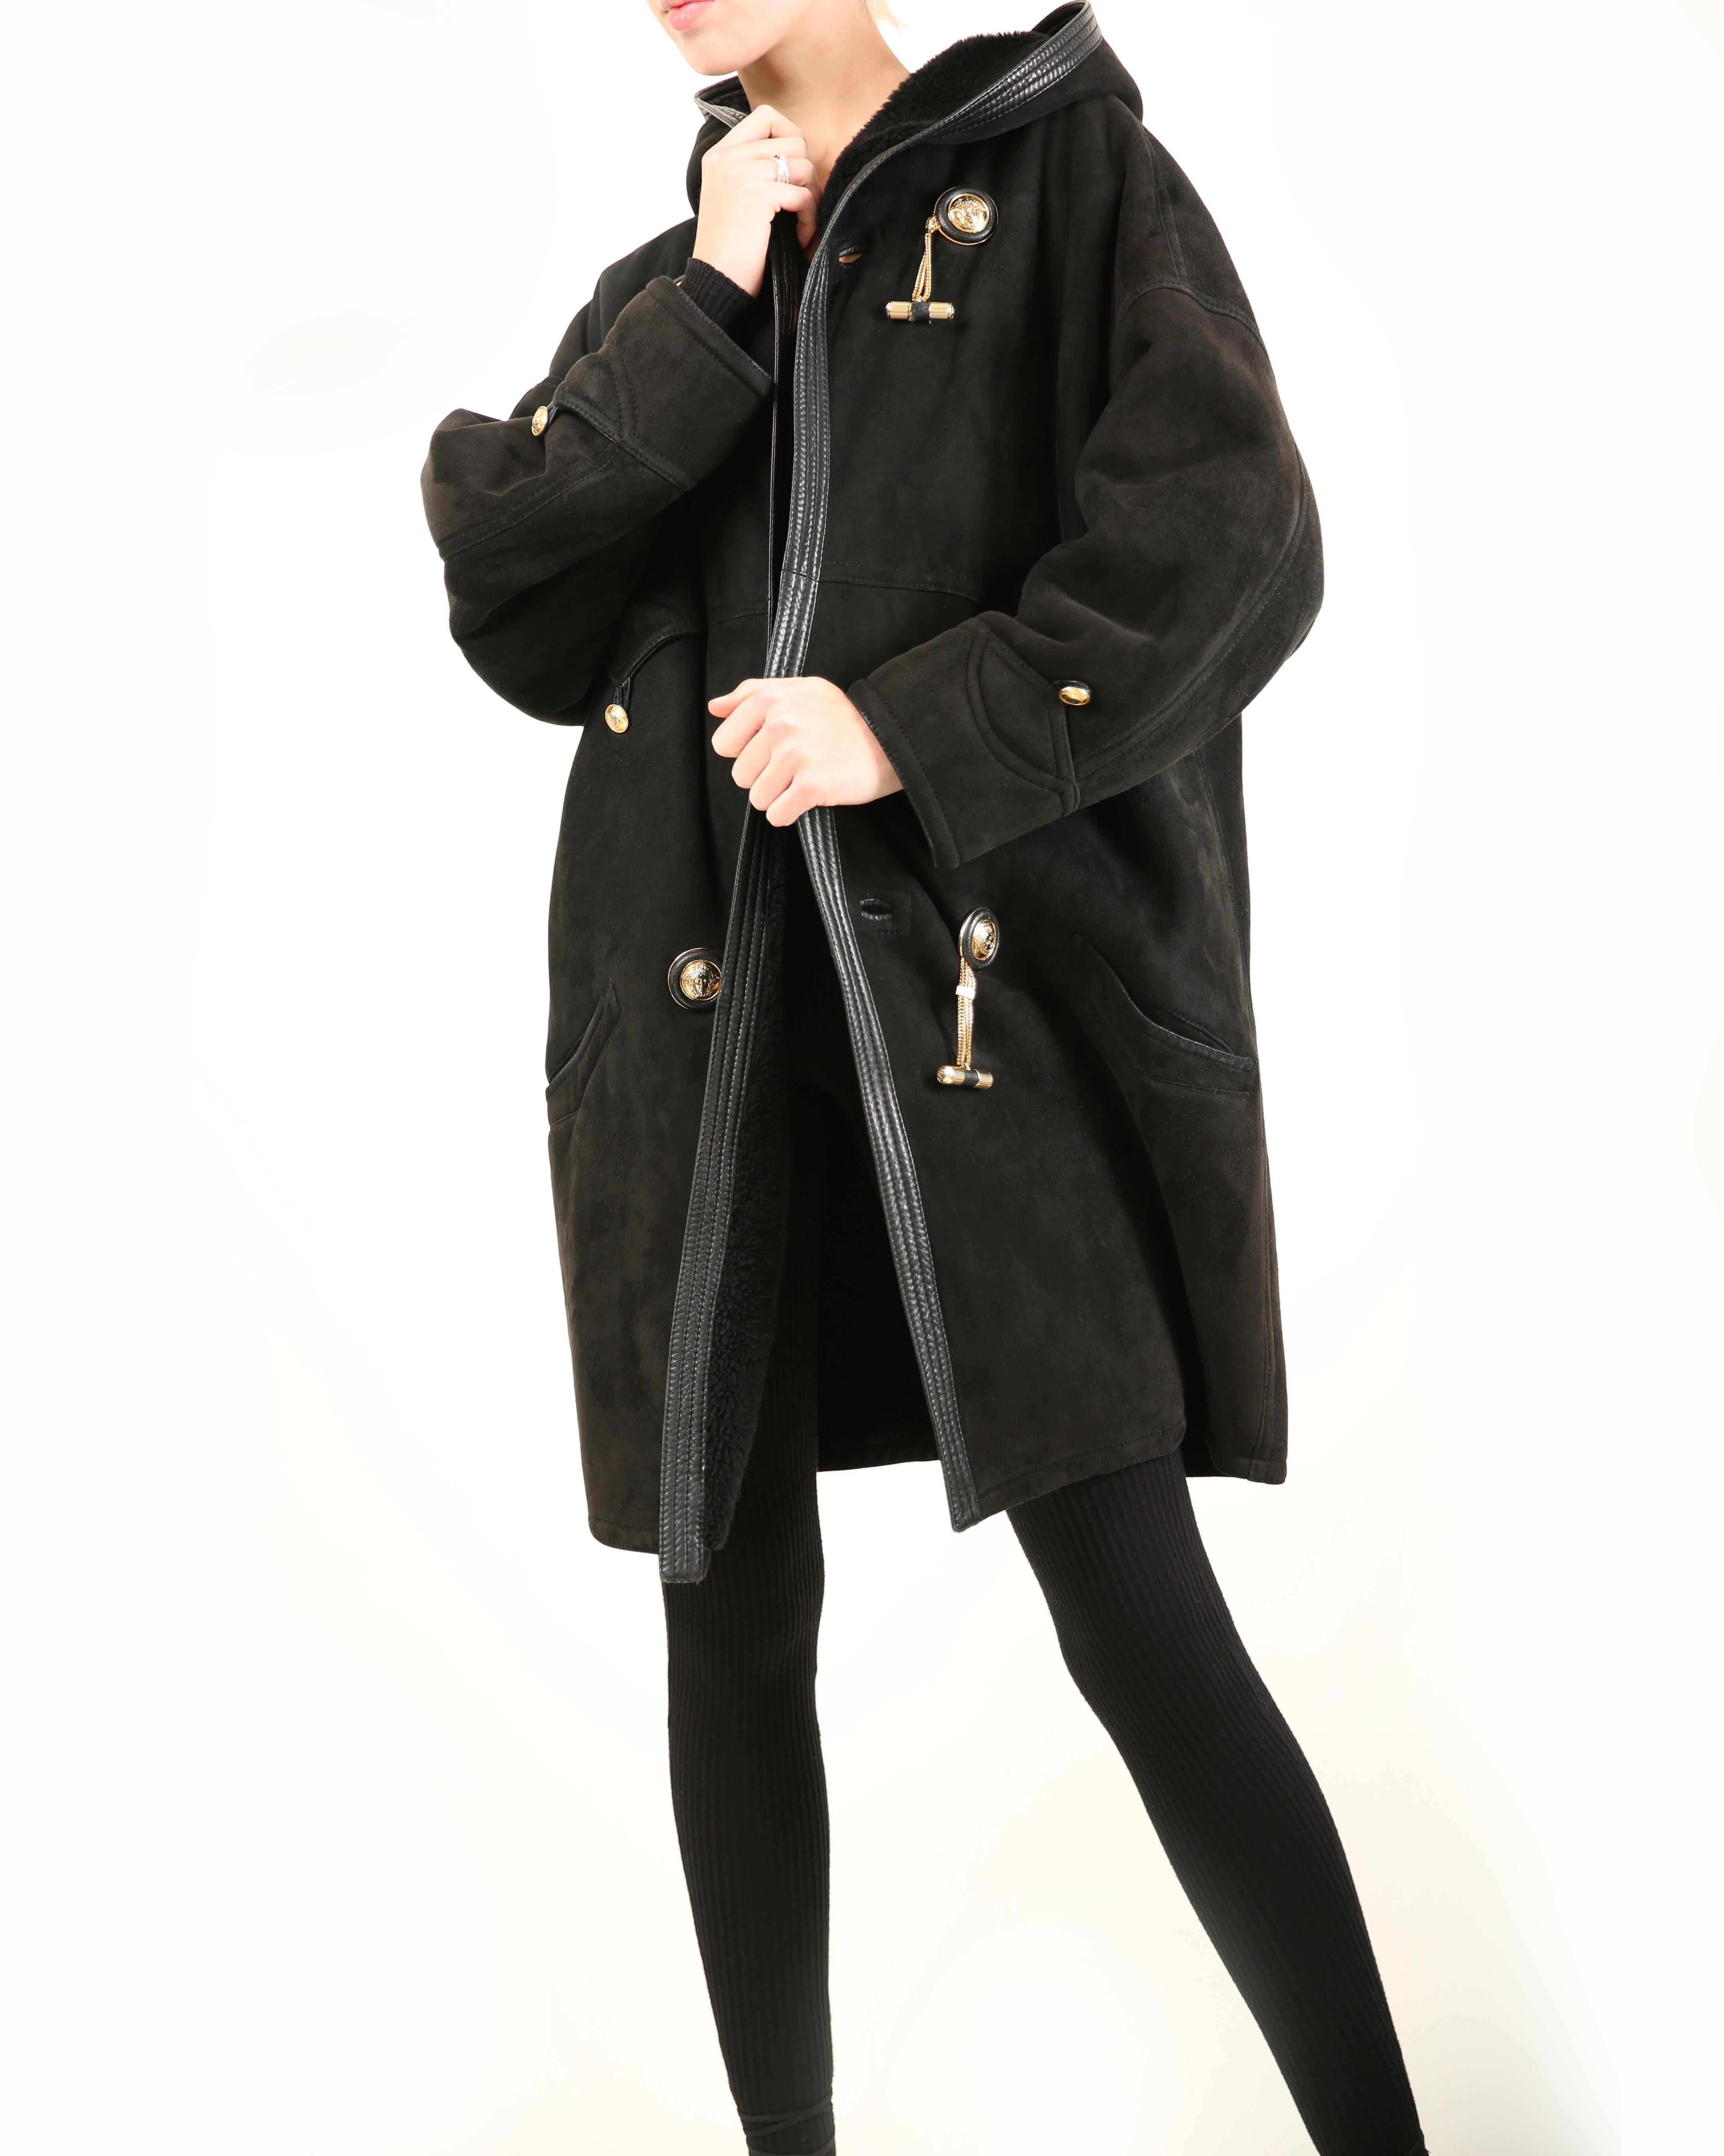 Gianni Versace 90's XS - L black leather suede shearling bondage coat jacket For Sale 6